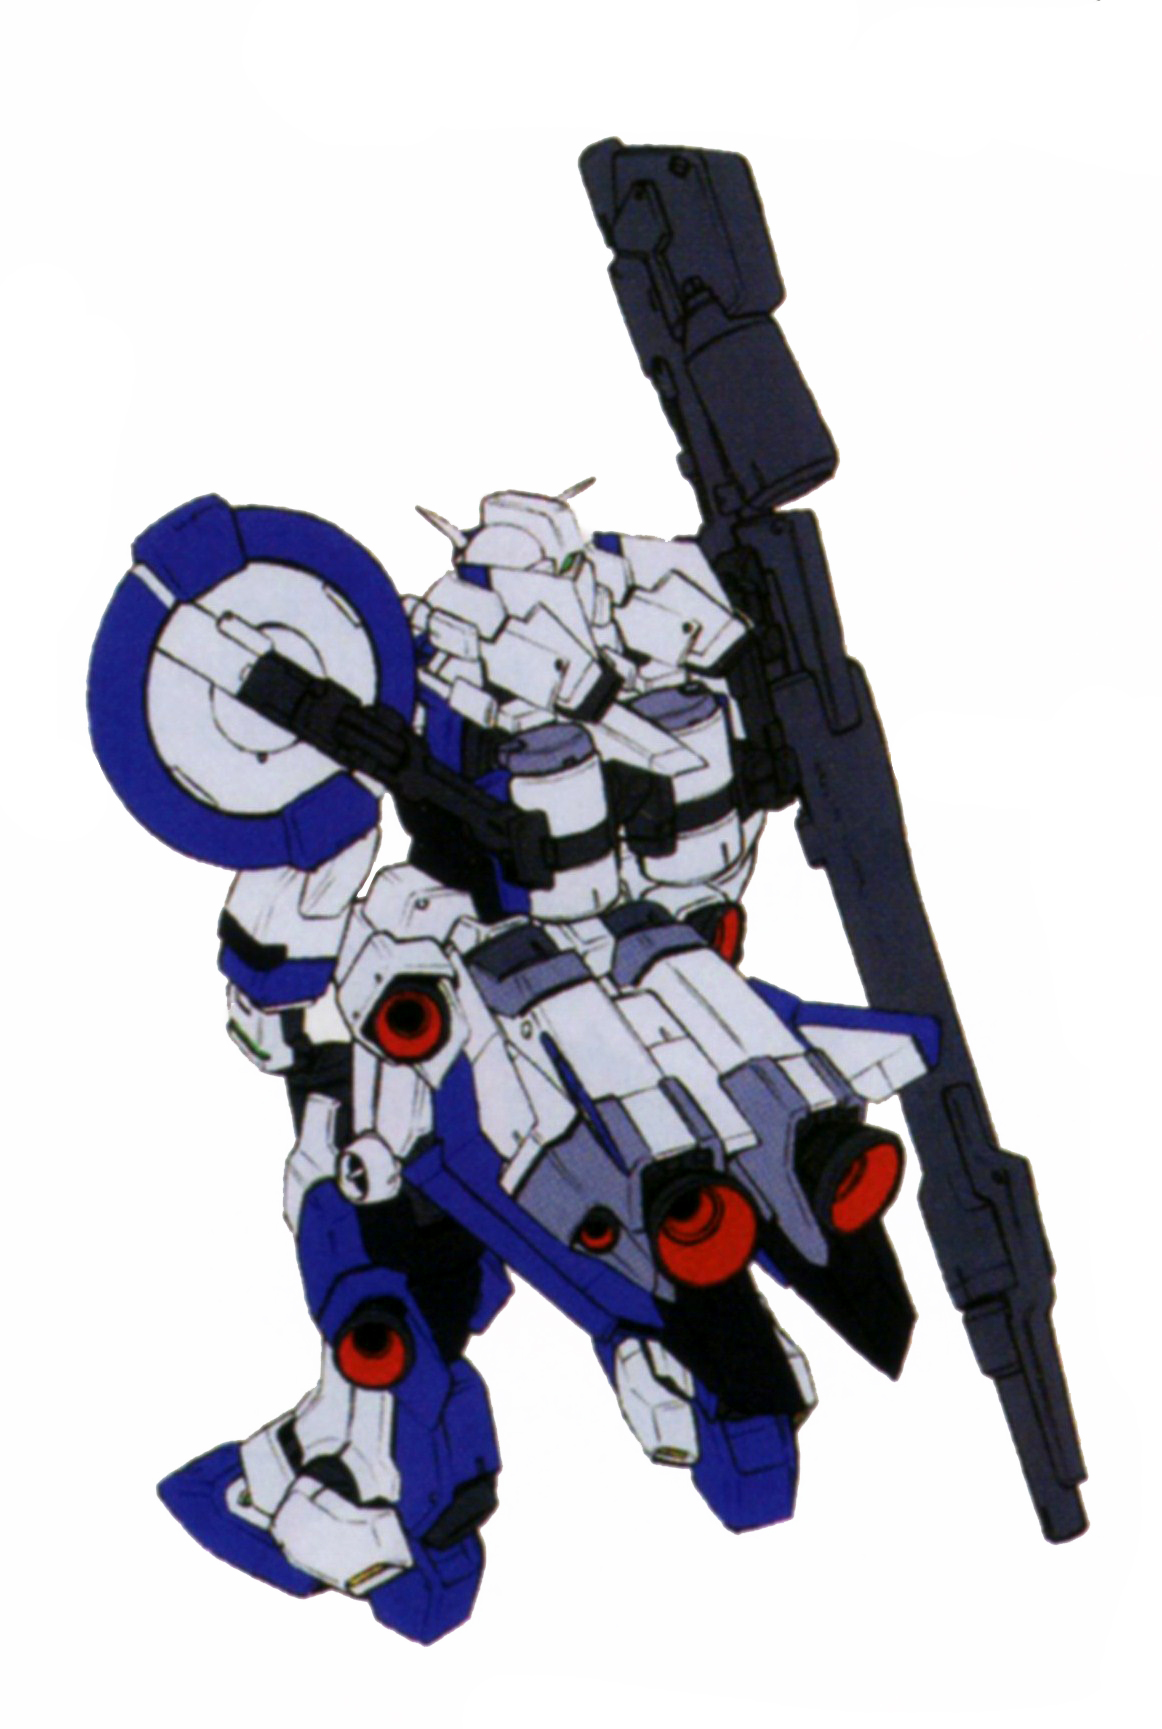 Rx 78gp00 Gundam Blossom The Gundam Wiki Fandom